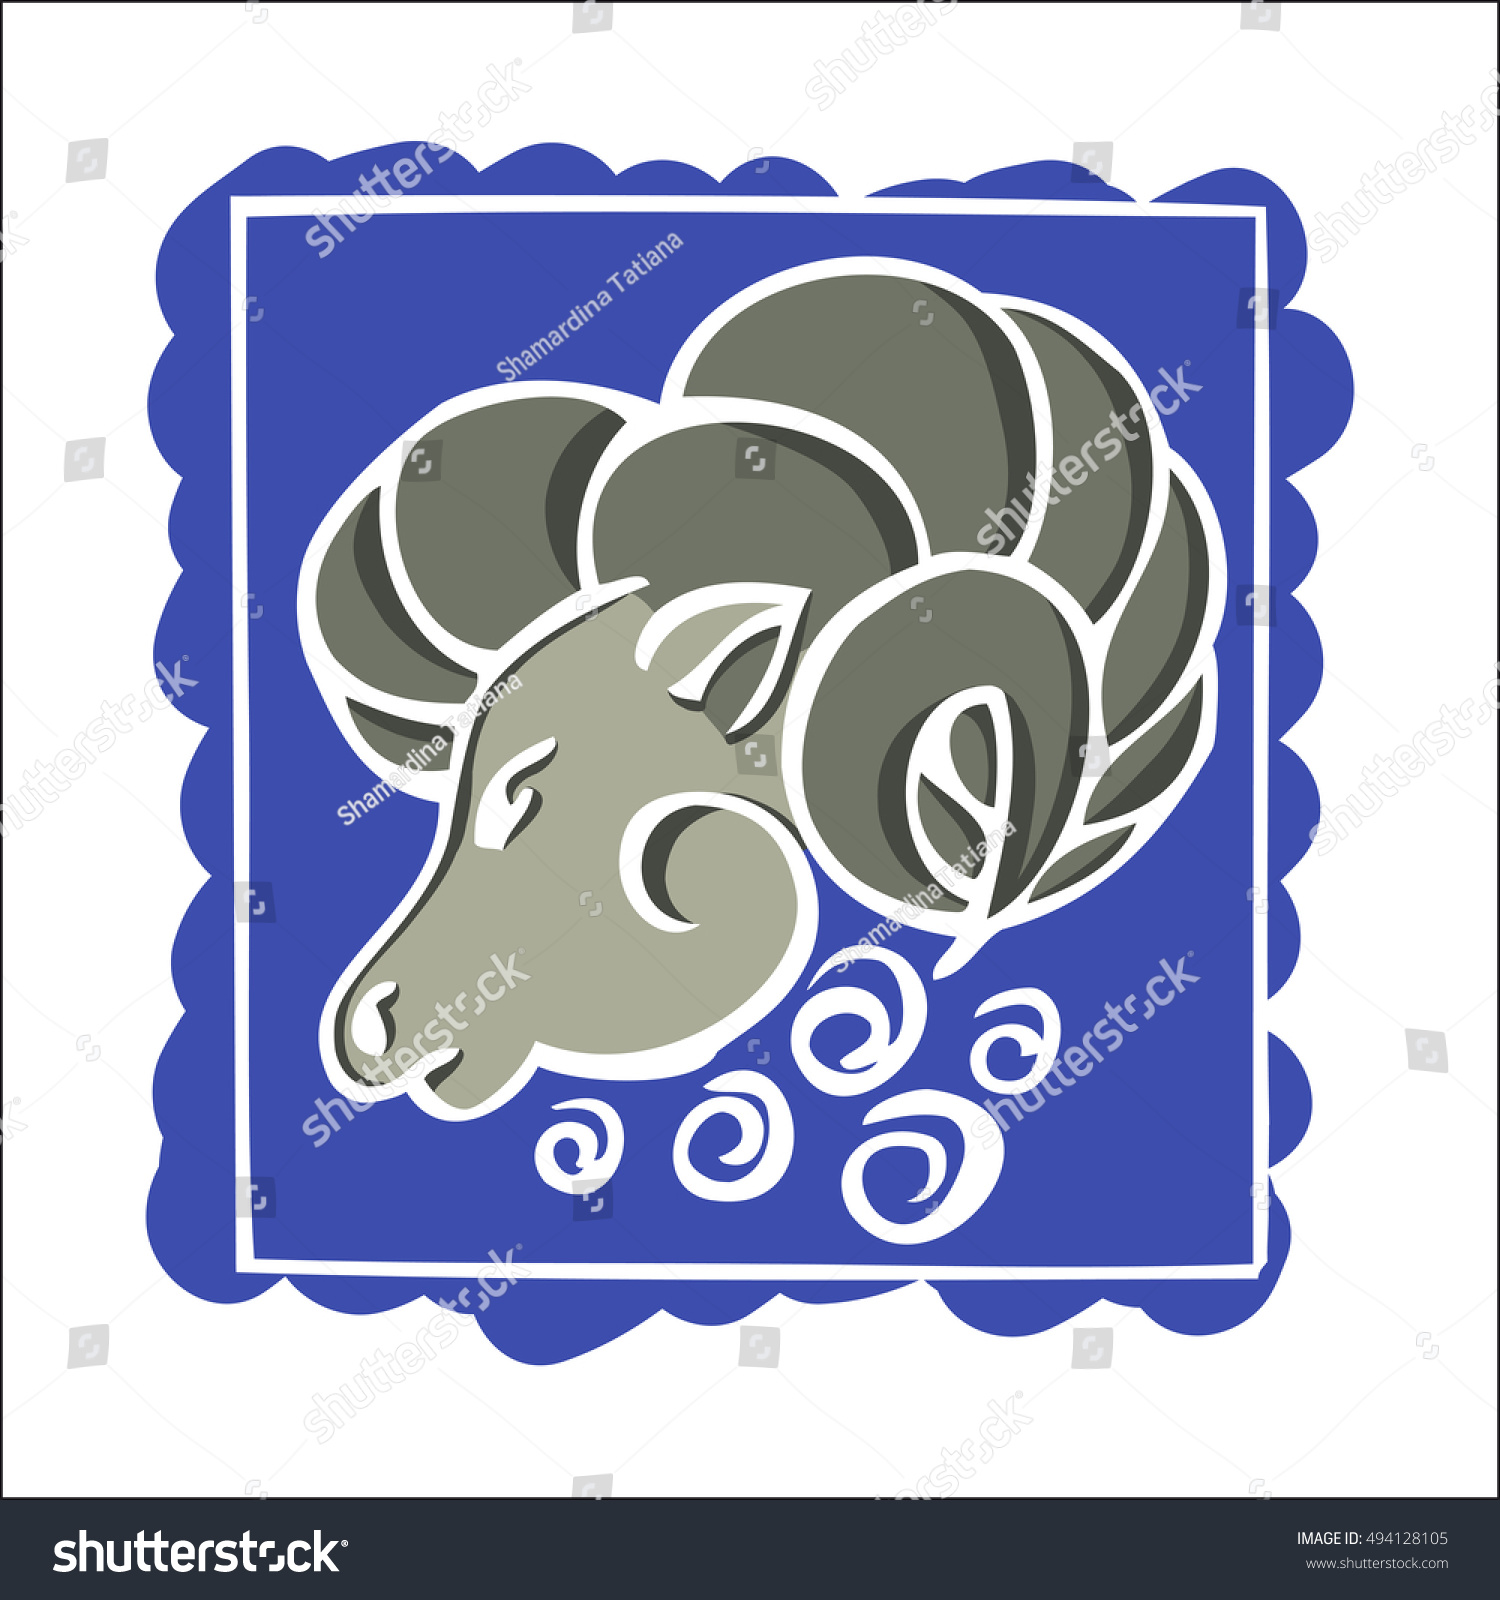 Aries Horoscope Symbol Zodiac Sign Stock Vector (Royalty Free ...